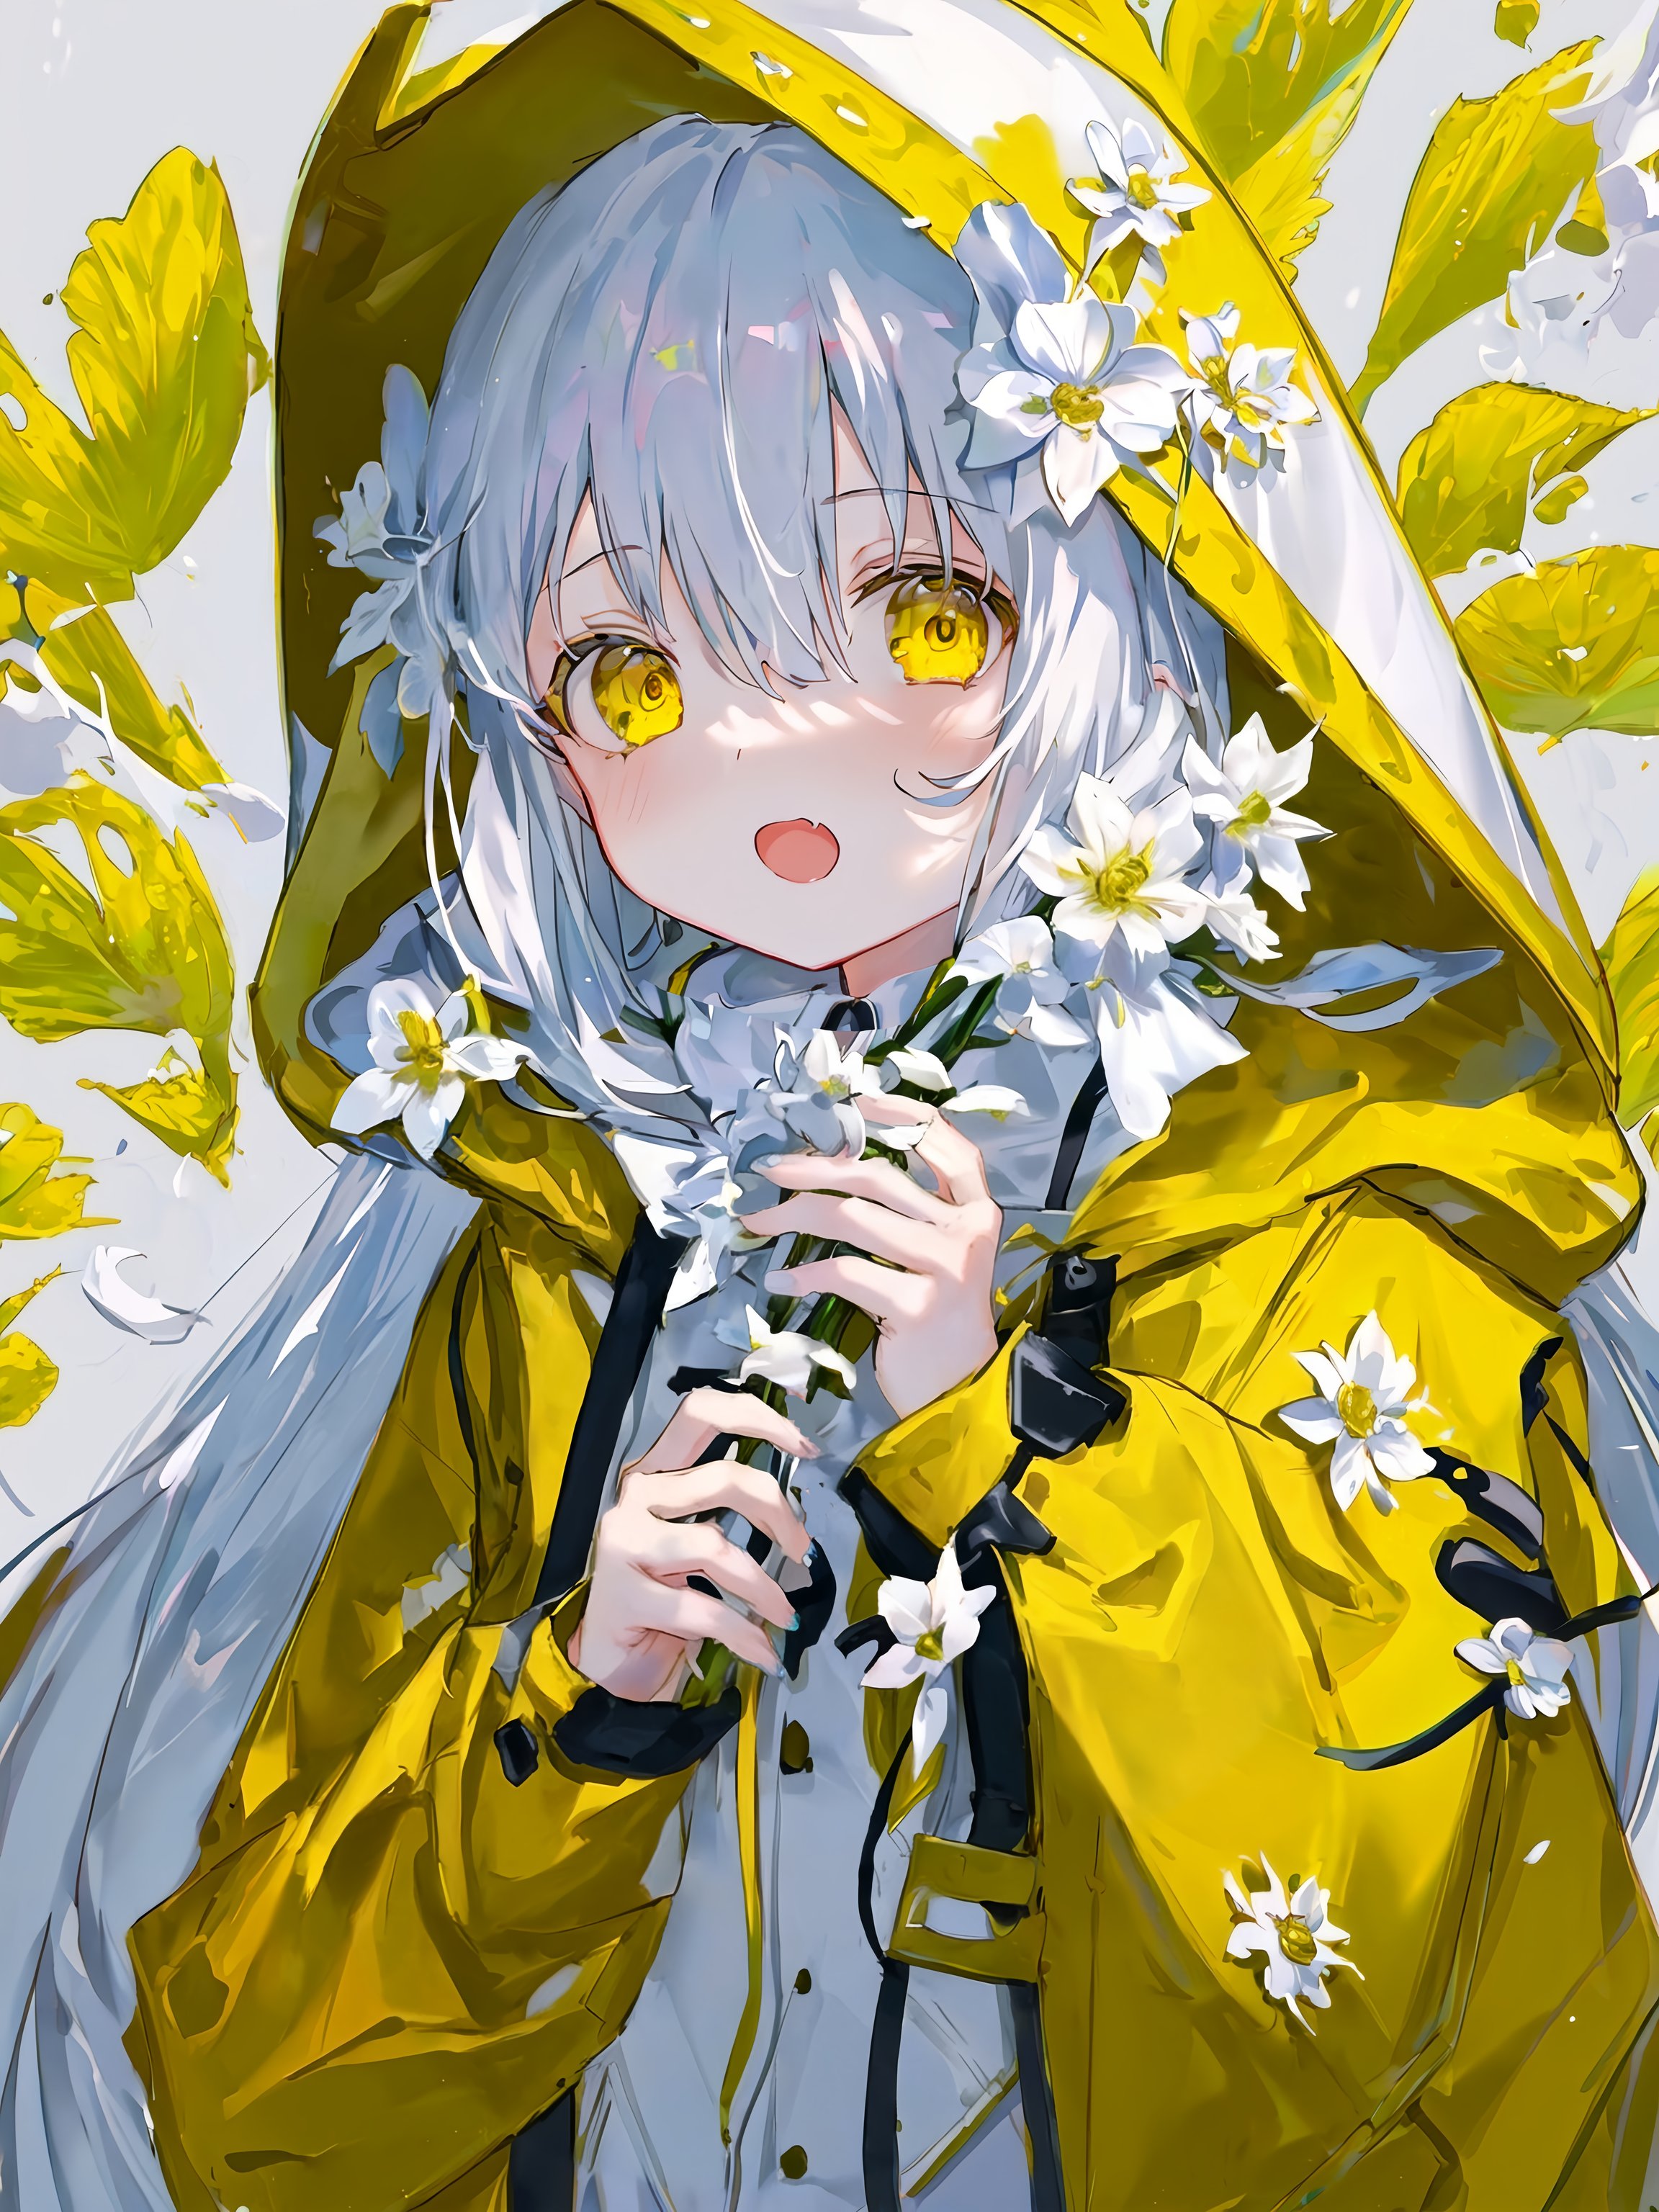 Anime 2304x3072 anime girls white hair flowers yellow raincoat yellow eyes raincoat portrait display flower in hair